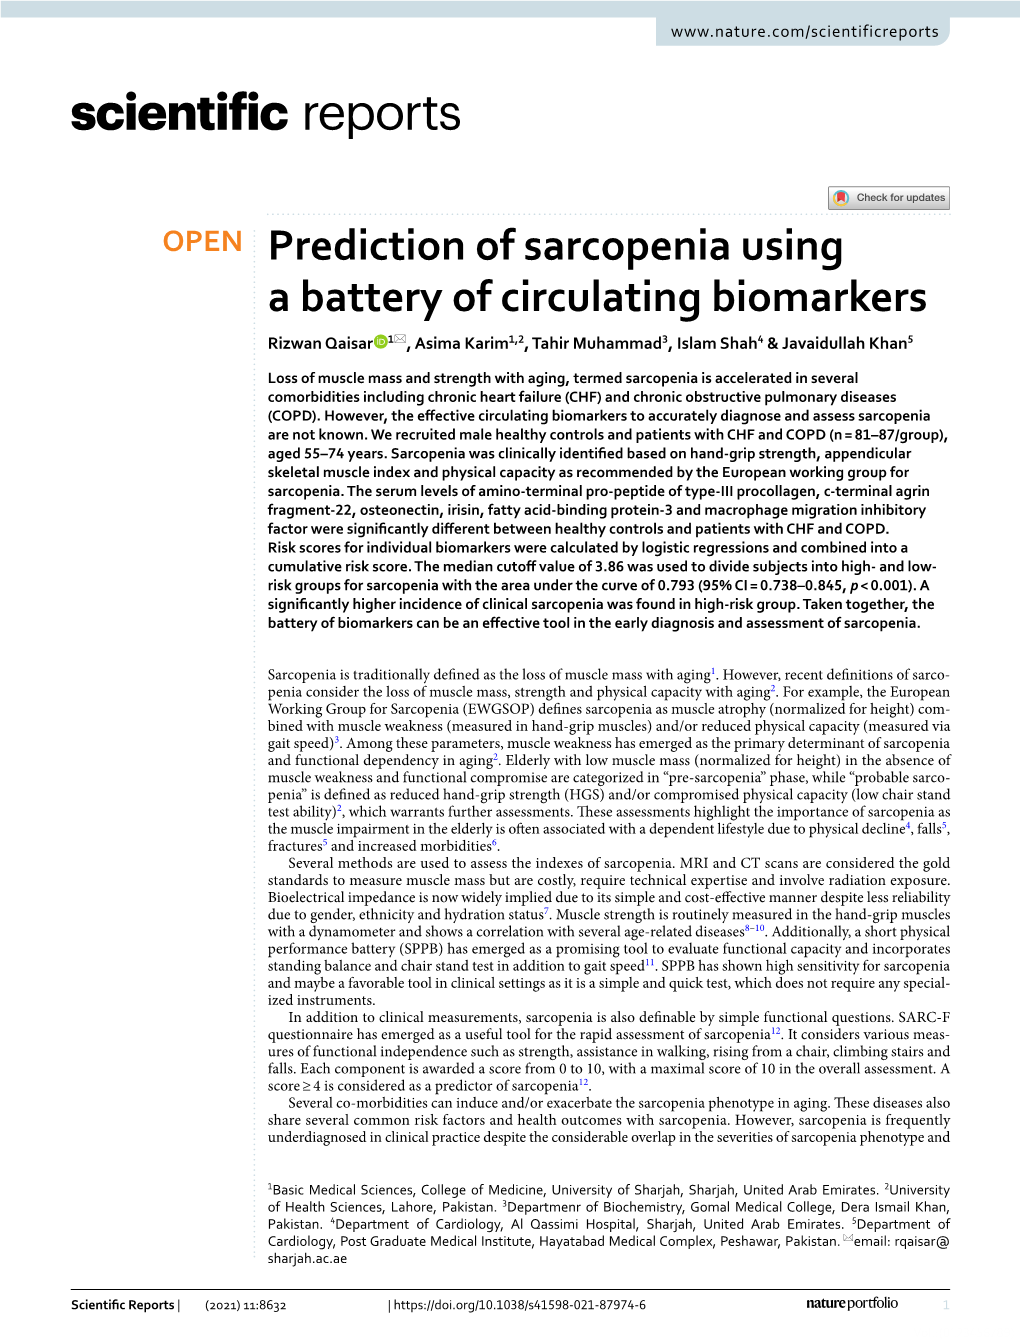 Prediction of Sarcopenia Using a Battery of Circulating Biomarkers Rizwan Qaisar 1*, Asima Karim1,2, Tahir Muhammad3, Islam Shah4 & Javaidullah Khan5